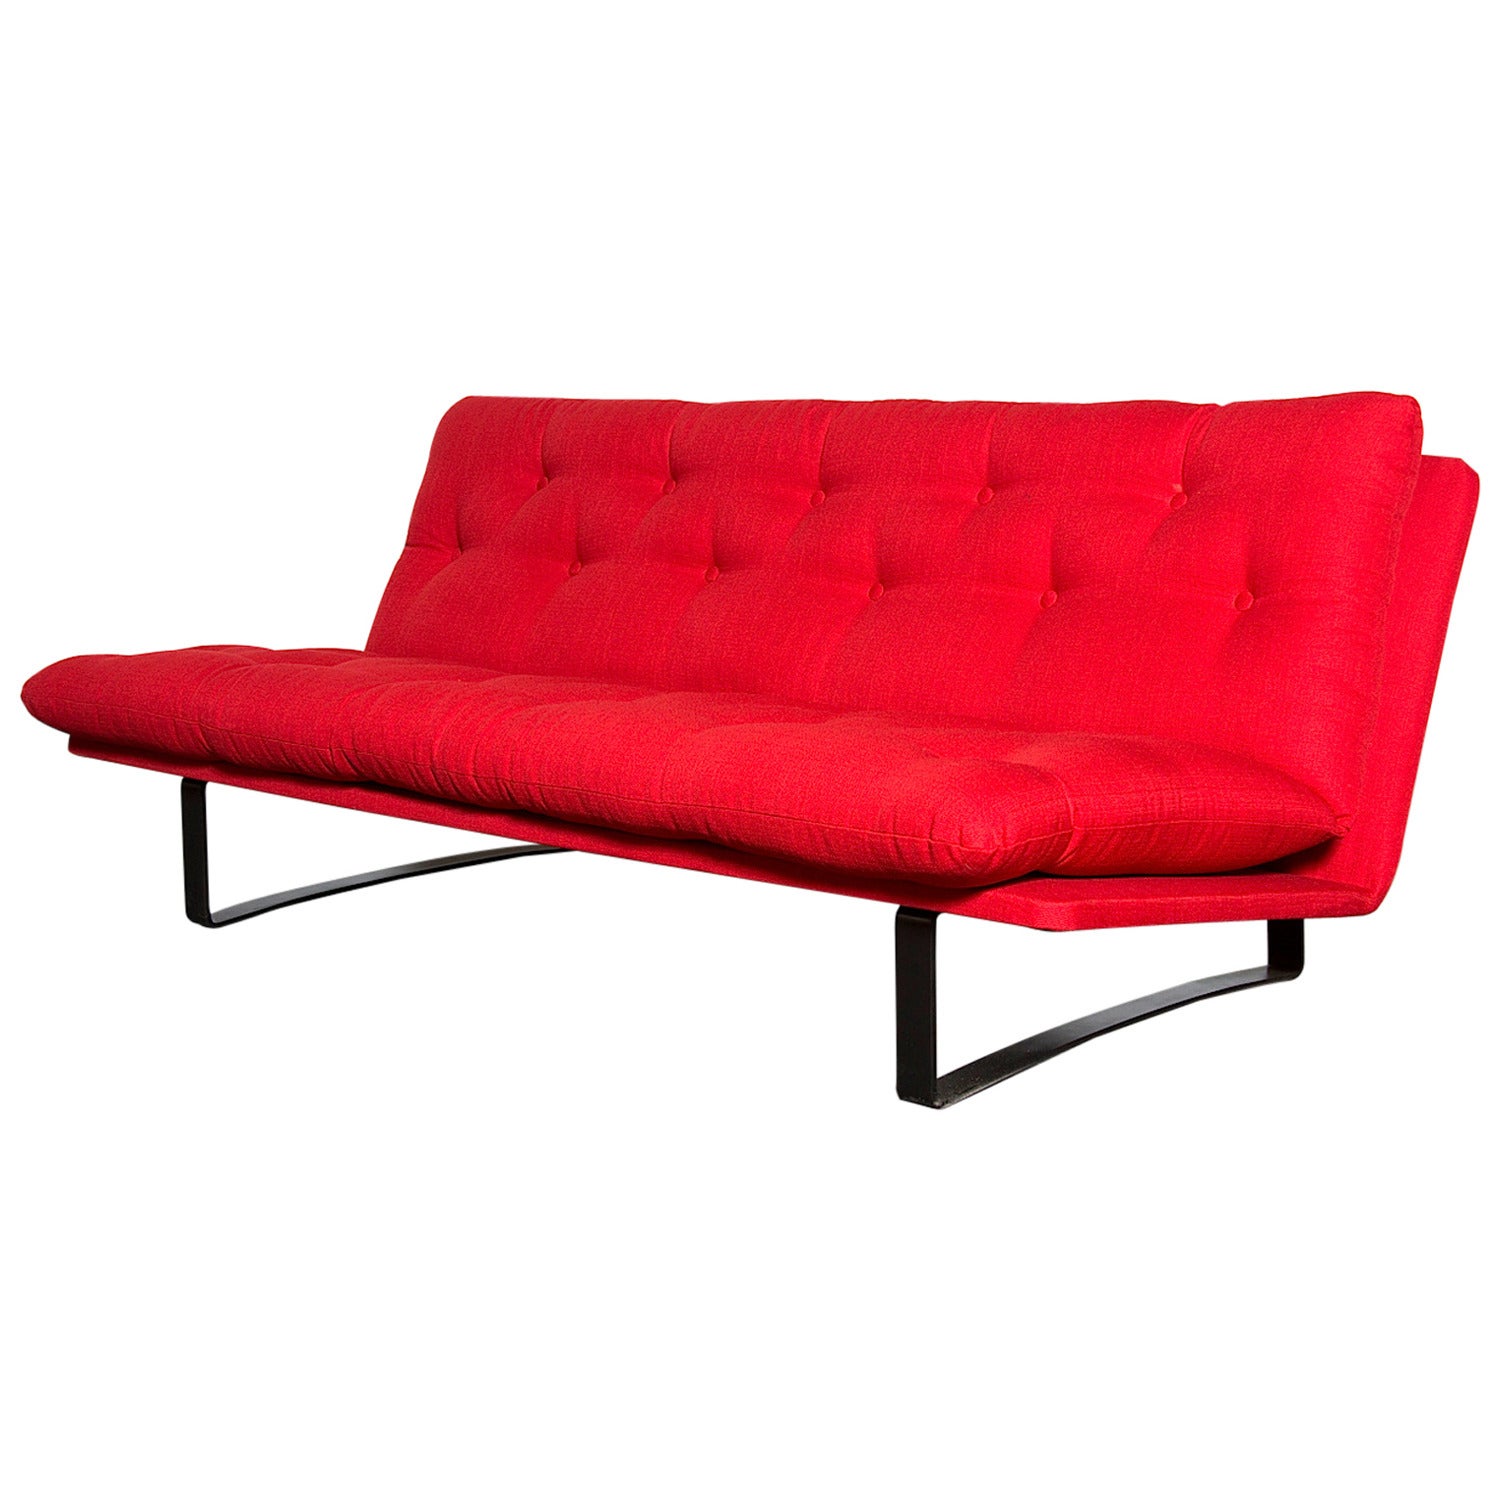 Kho Liang le Tufted Red Upholstered 'Model 662' Sofa for Artifort w/ Black Frame For Sale